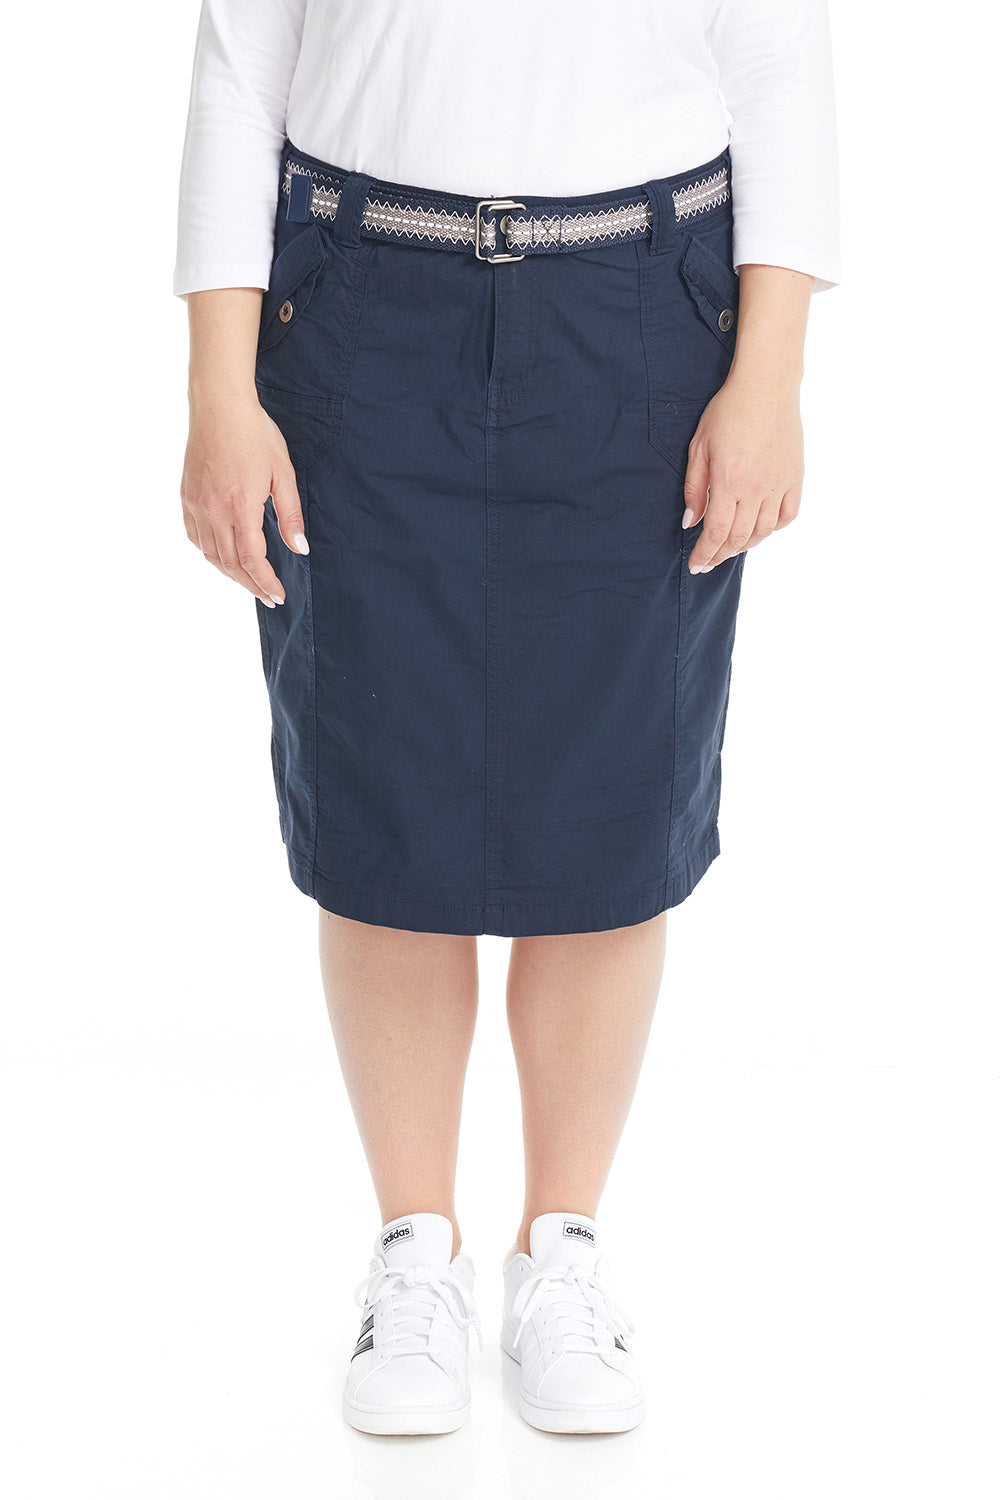 Esteez VIRGINIA Skirt - Stretch Poplin Cargo Knee Length Pencil Skirt for Women